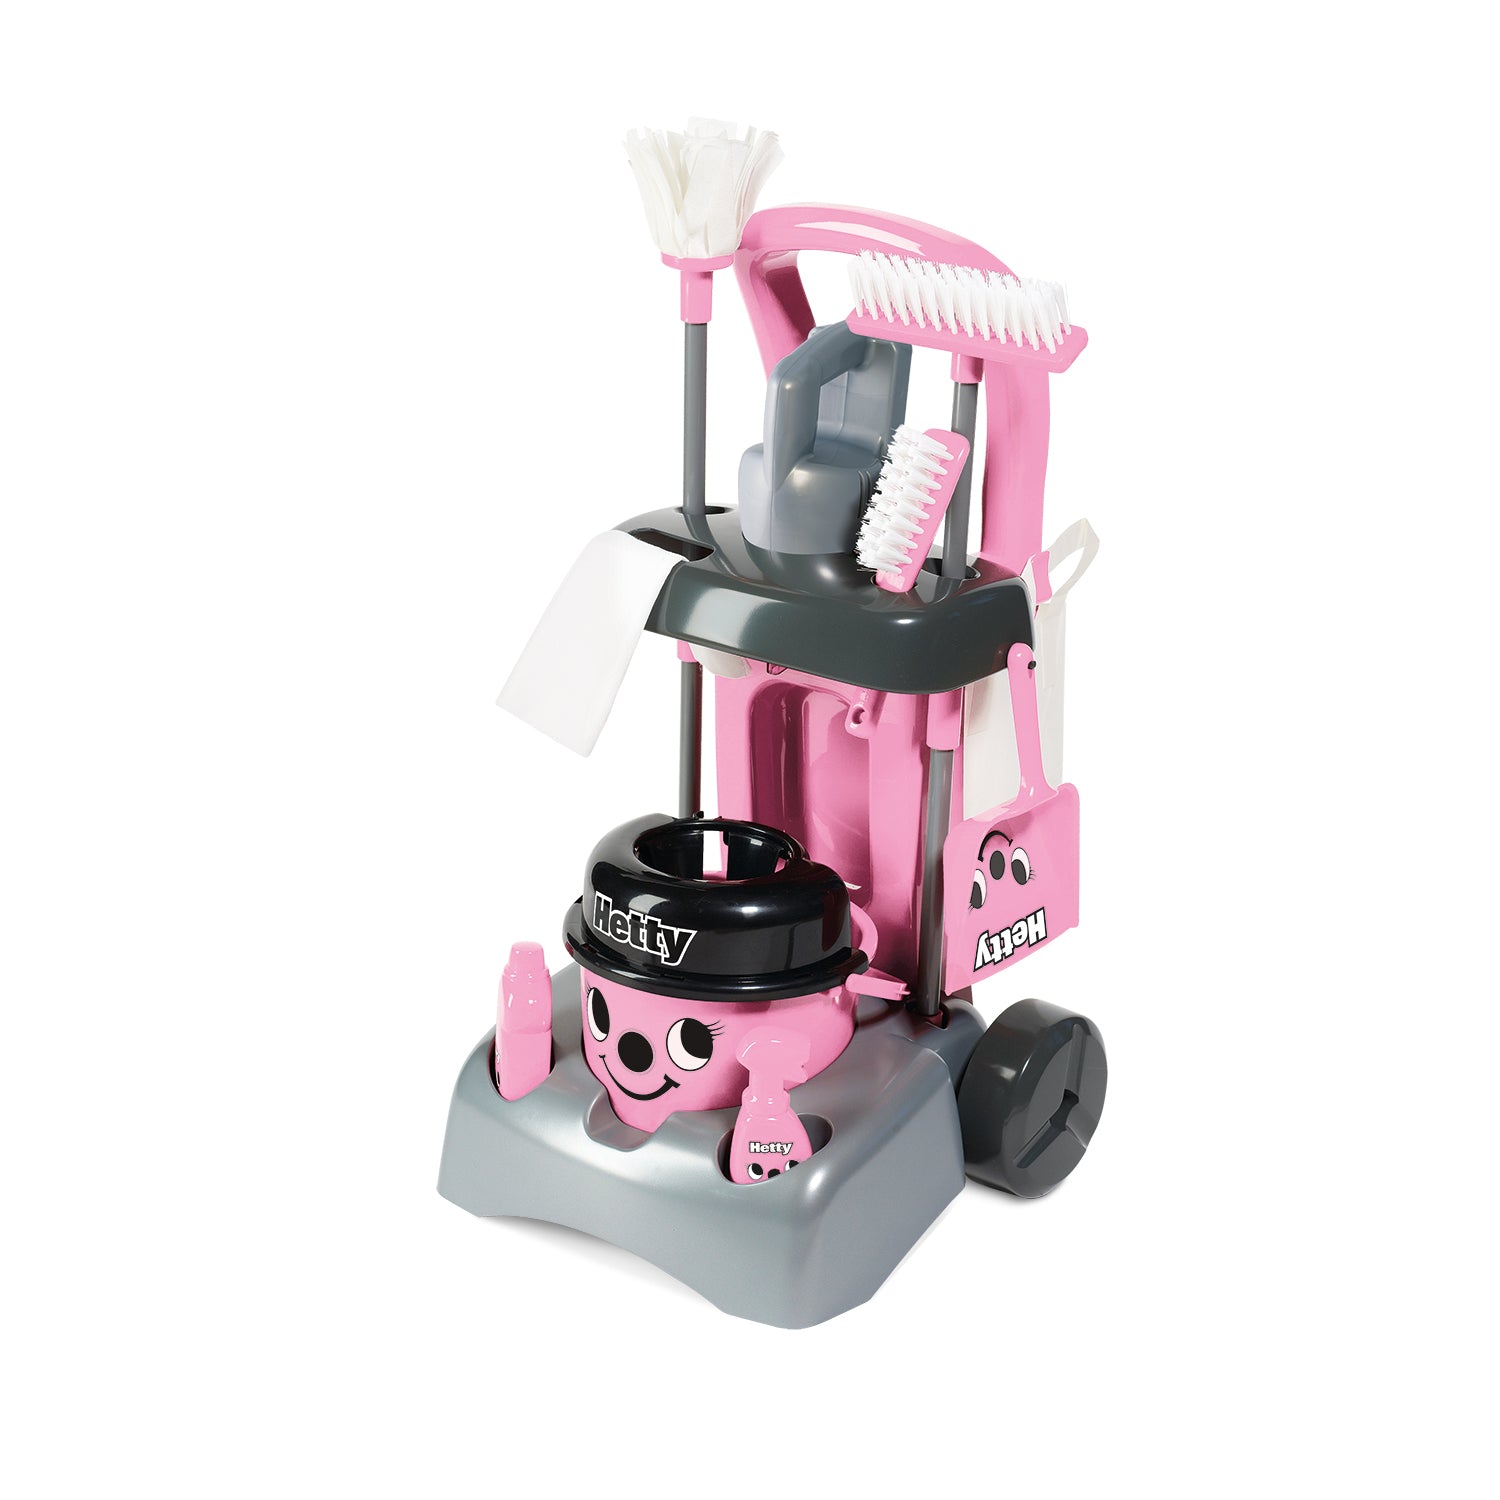 Casdon - Deluxe Hetty Cleaning Trolley Toy